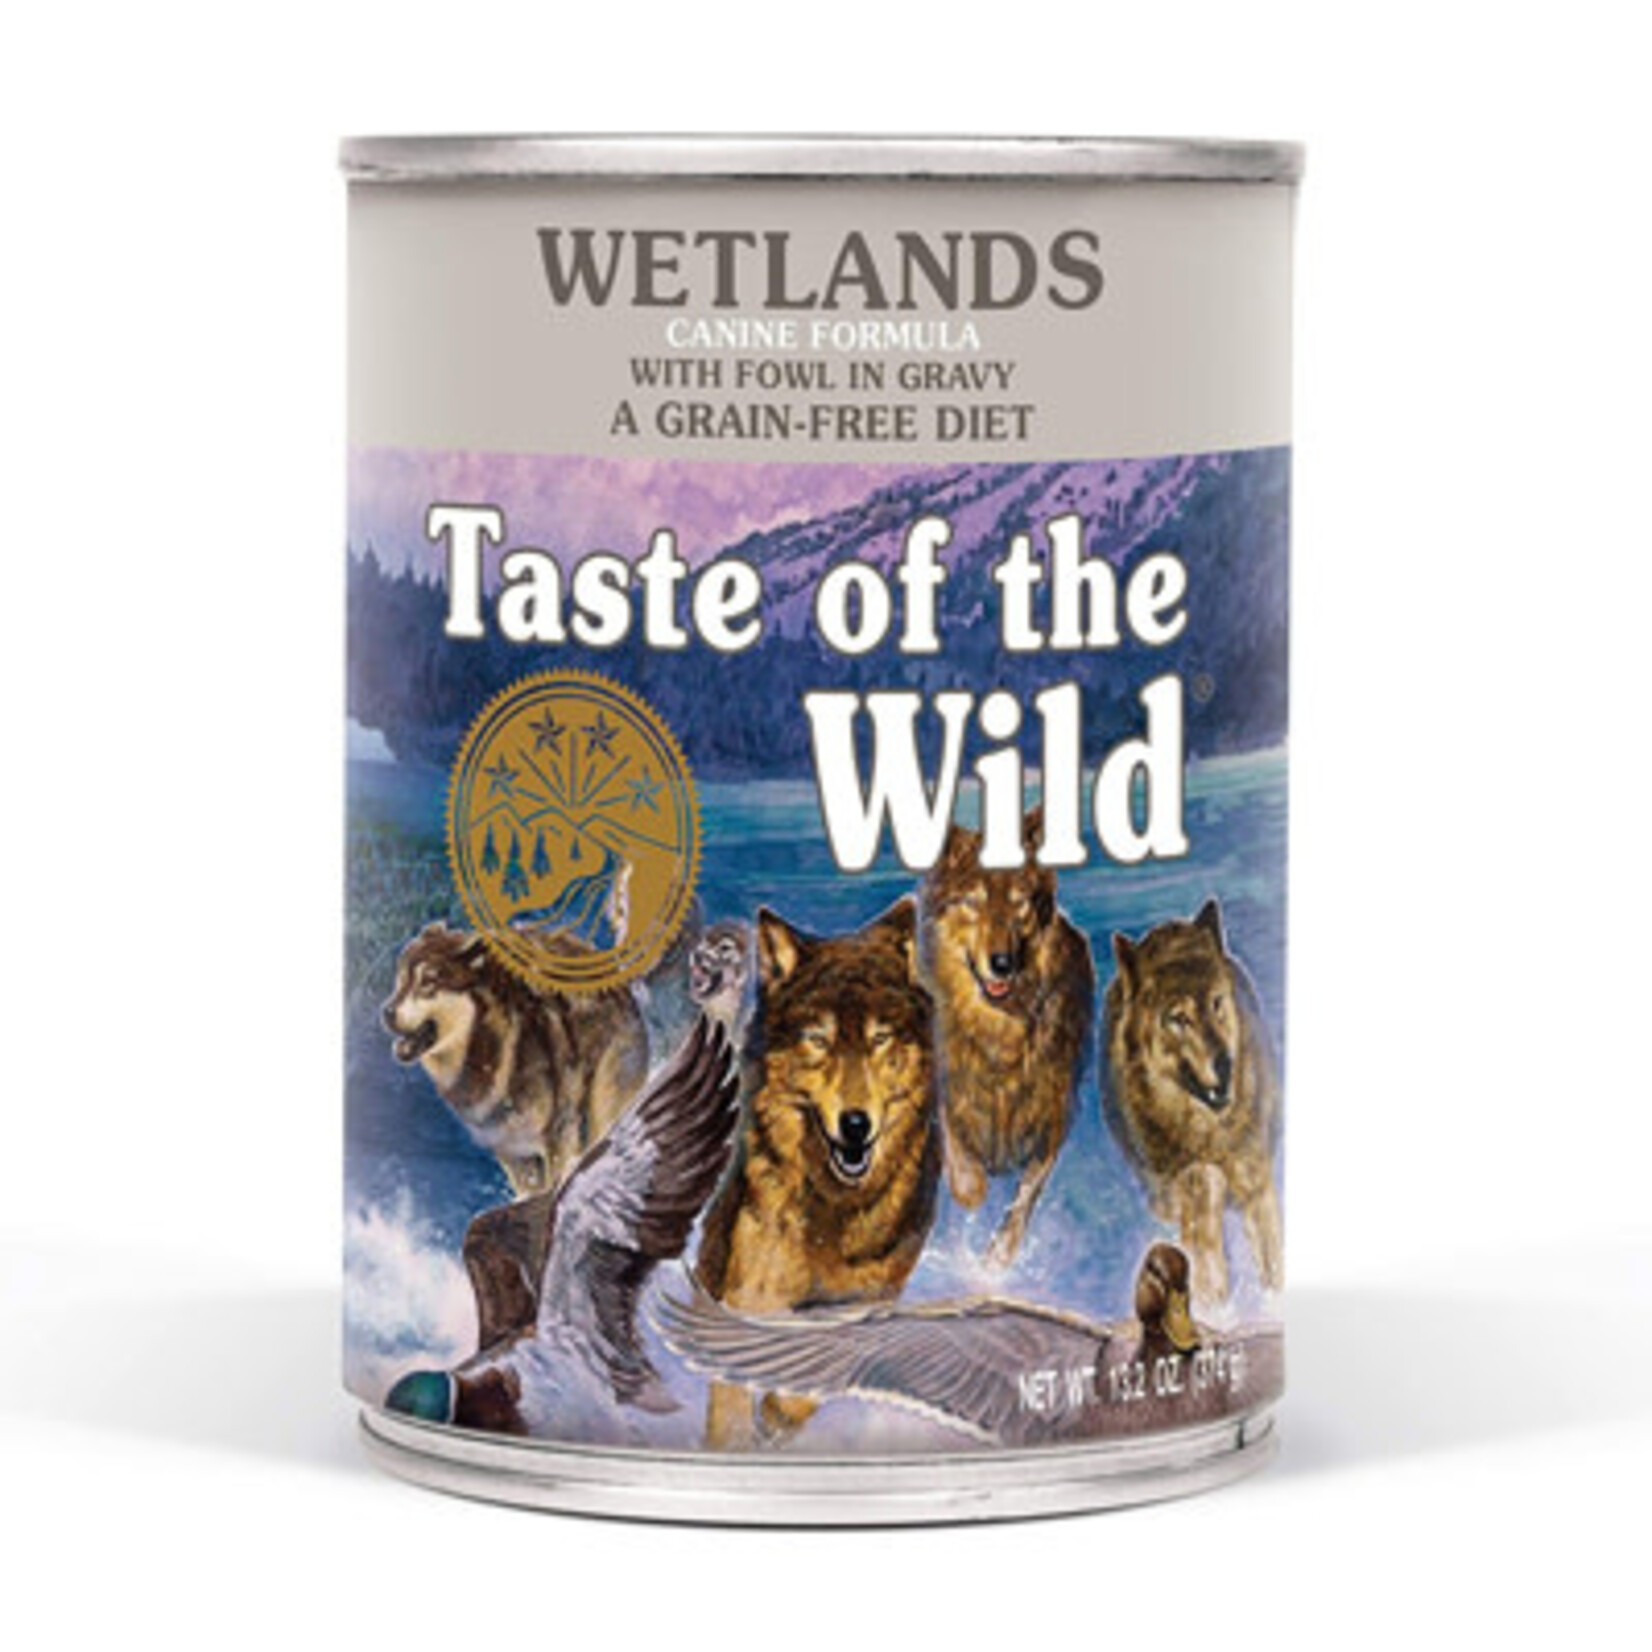 Taste of the Wild Taste of the Wild in Gravy 13.2oz Canned Dog Food